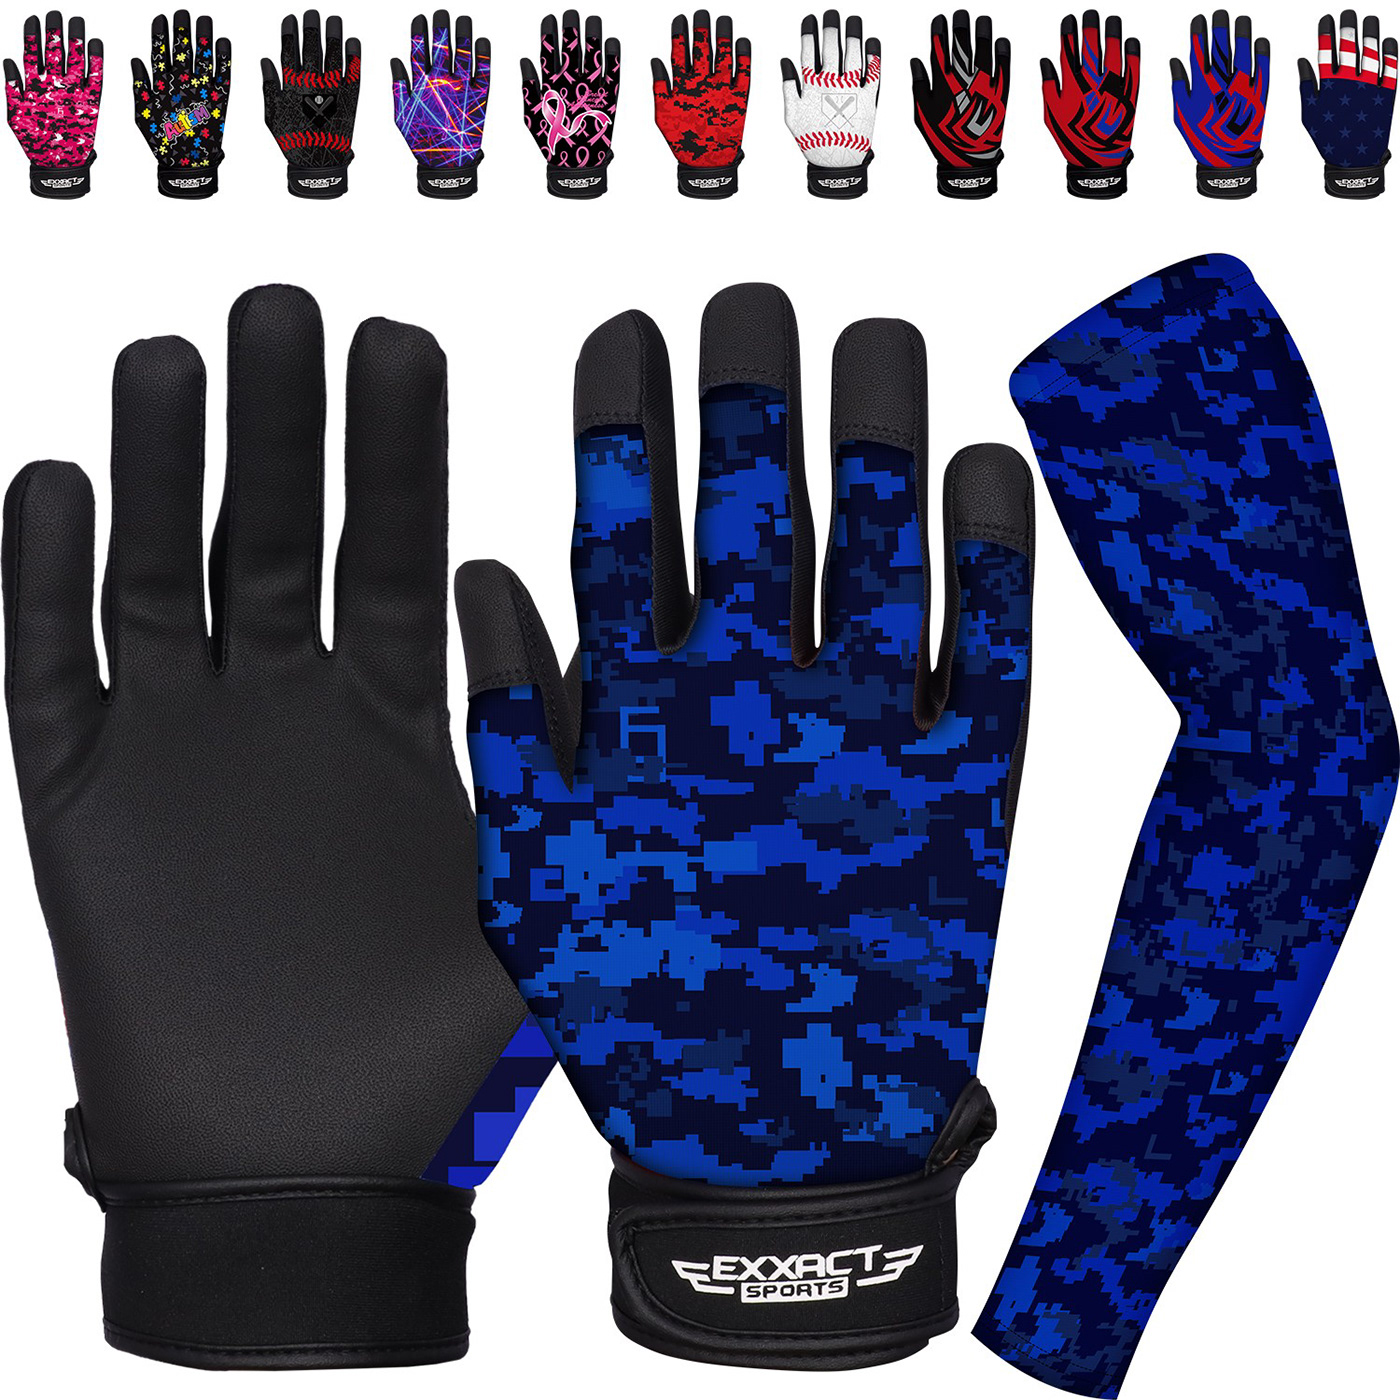 batting gloves arm sleeves sublimation design baseball sublimation print apparel Sportswear USA Sports Amazon Listing Amazon Product